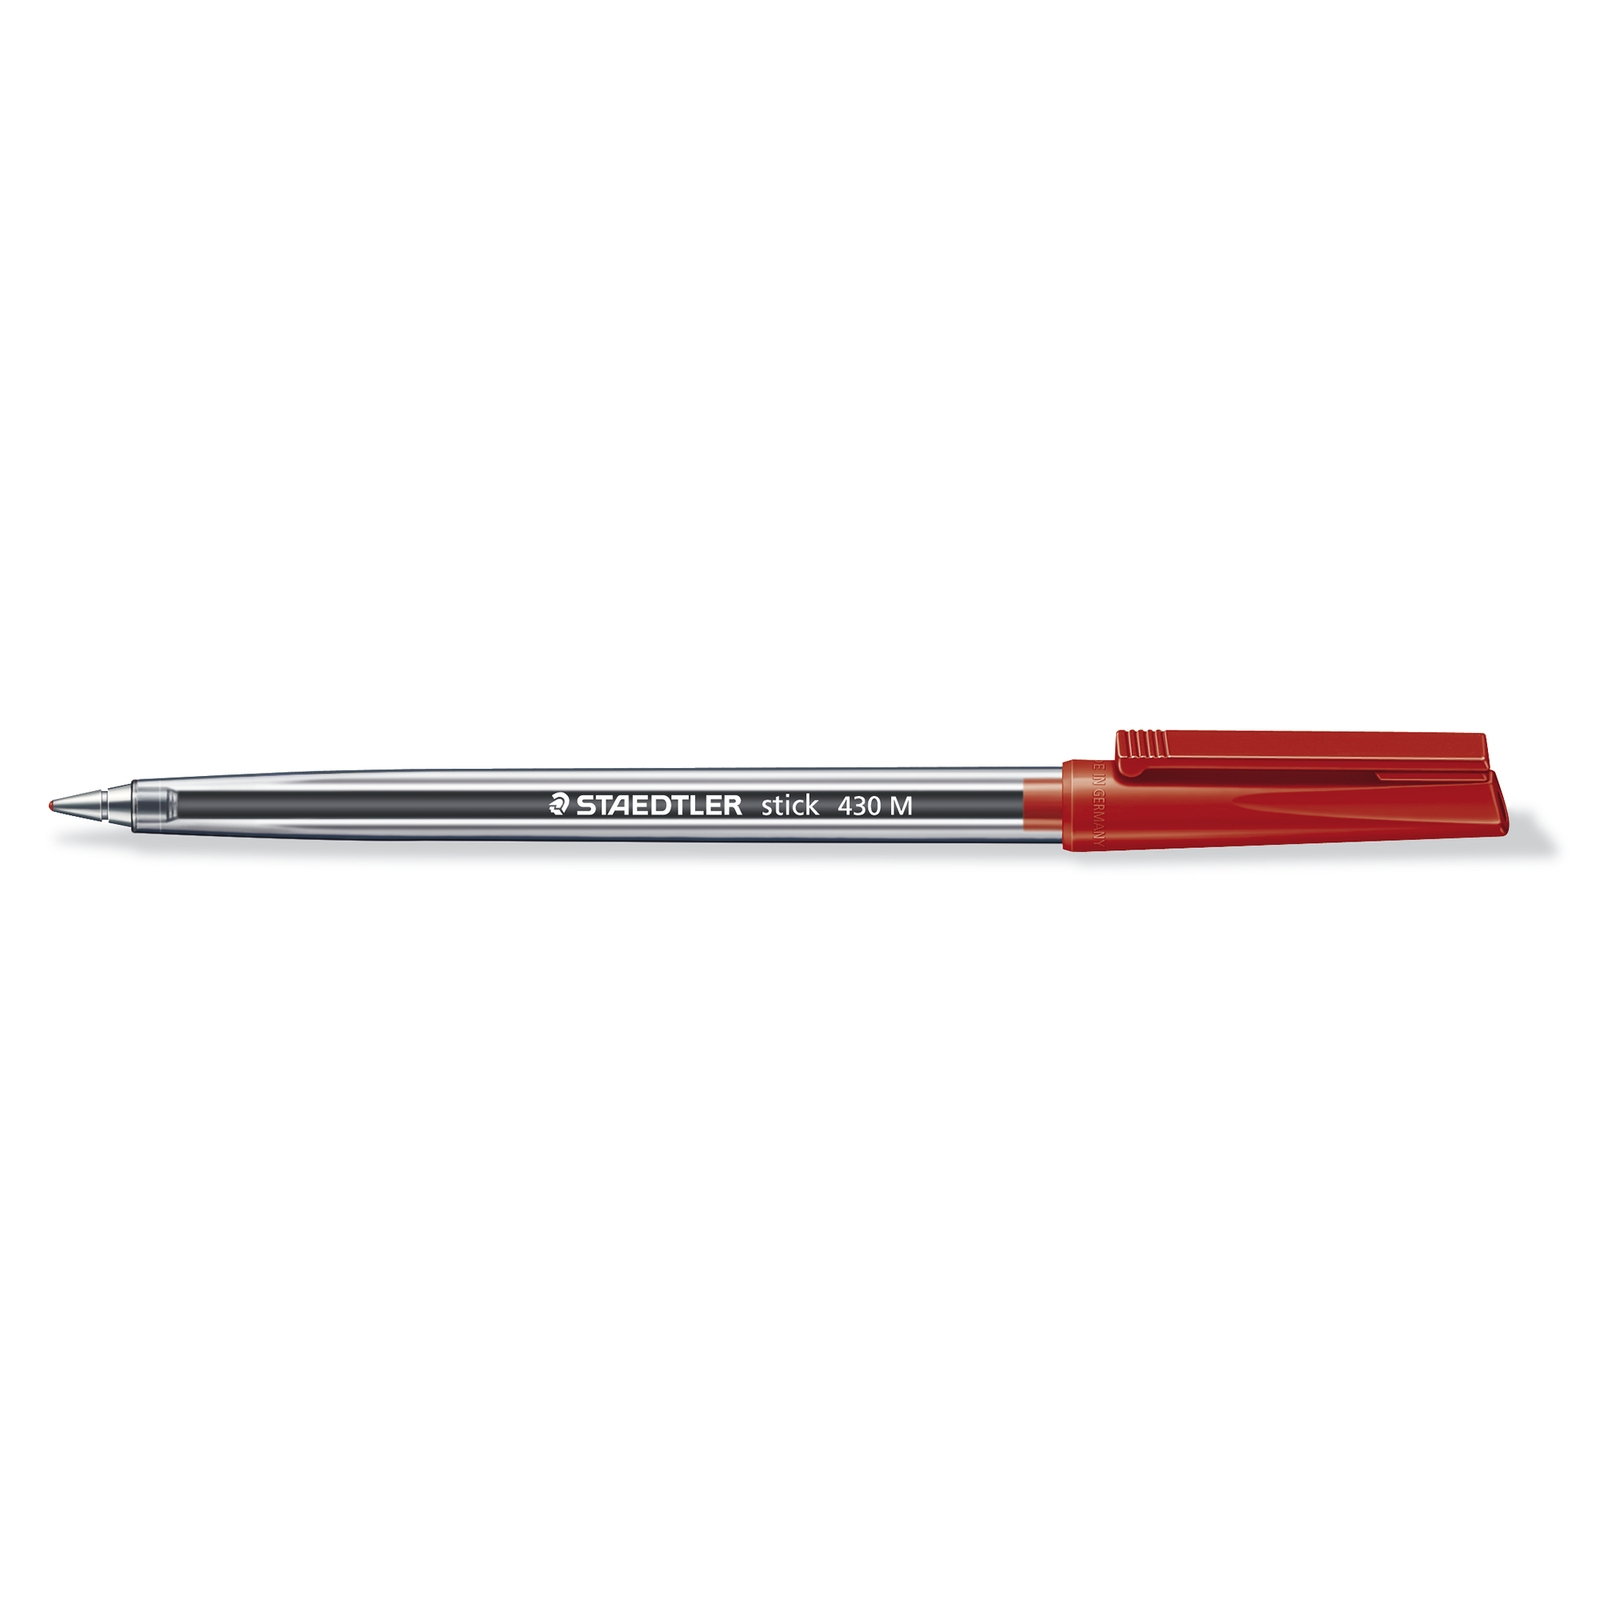 Staedtler Red Stick M430 Ballpoint Pen - Medium Nib - Pack of 50